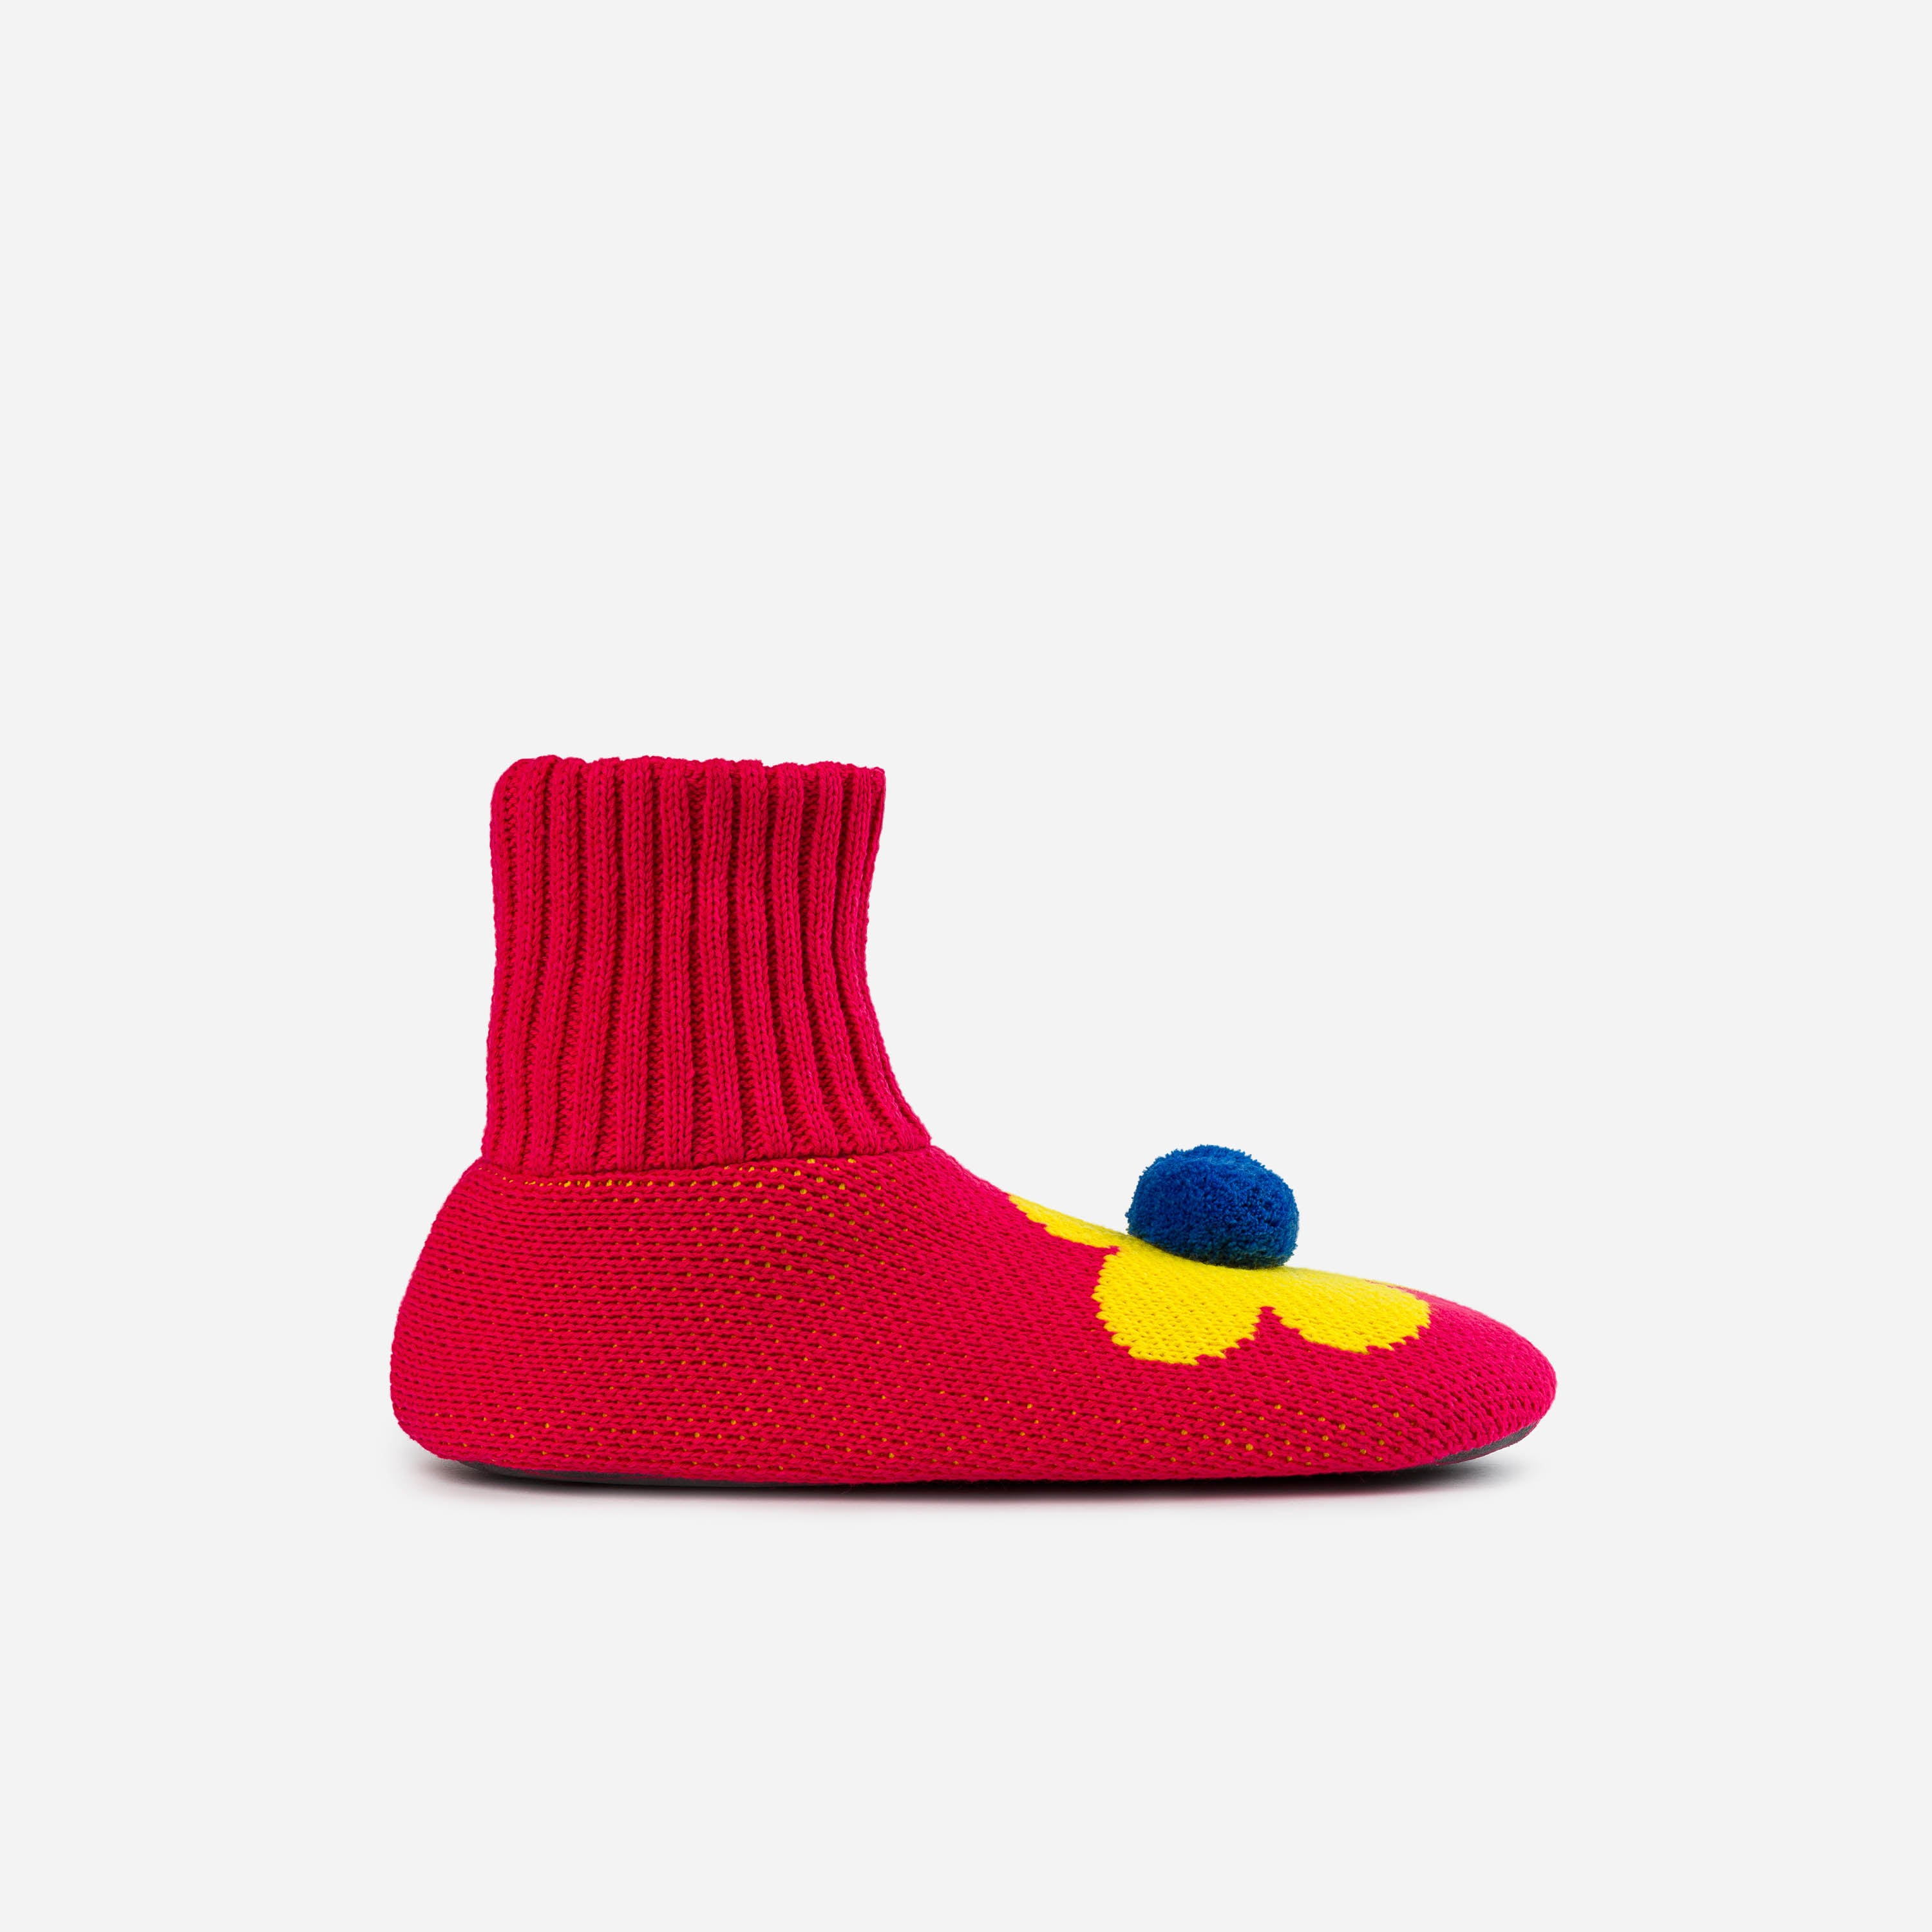 Collégien - FLORE FLORALIE Slippers-socks on labotte